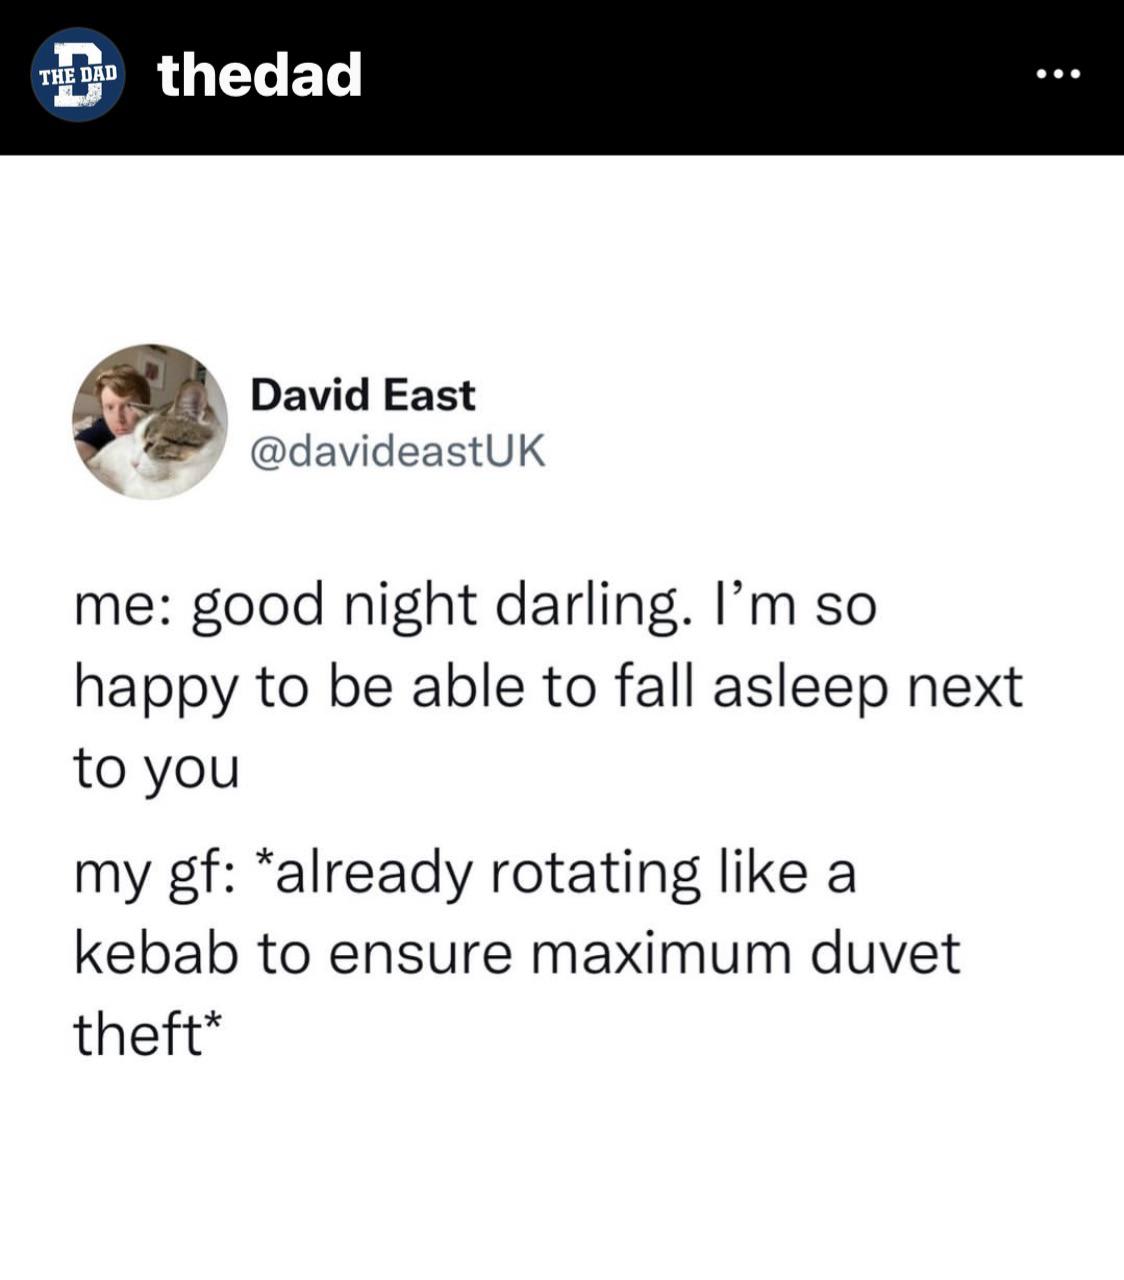 Guilty as the kebab rotating to ensure maximum duvet theft